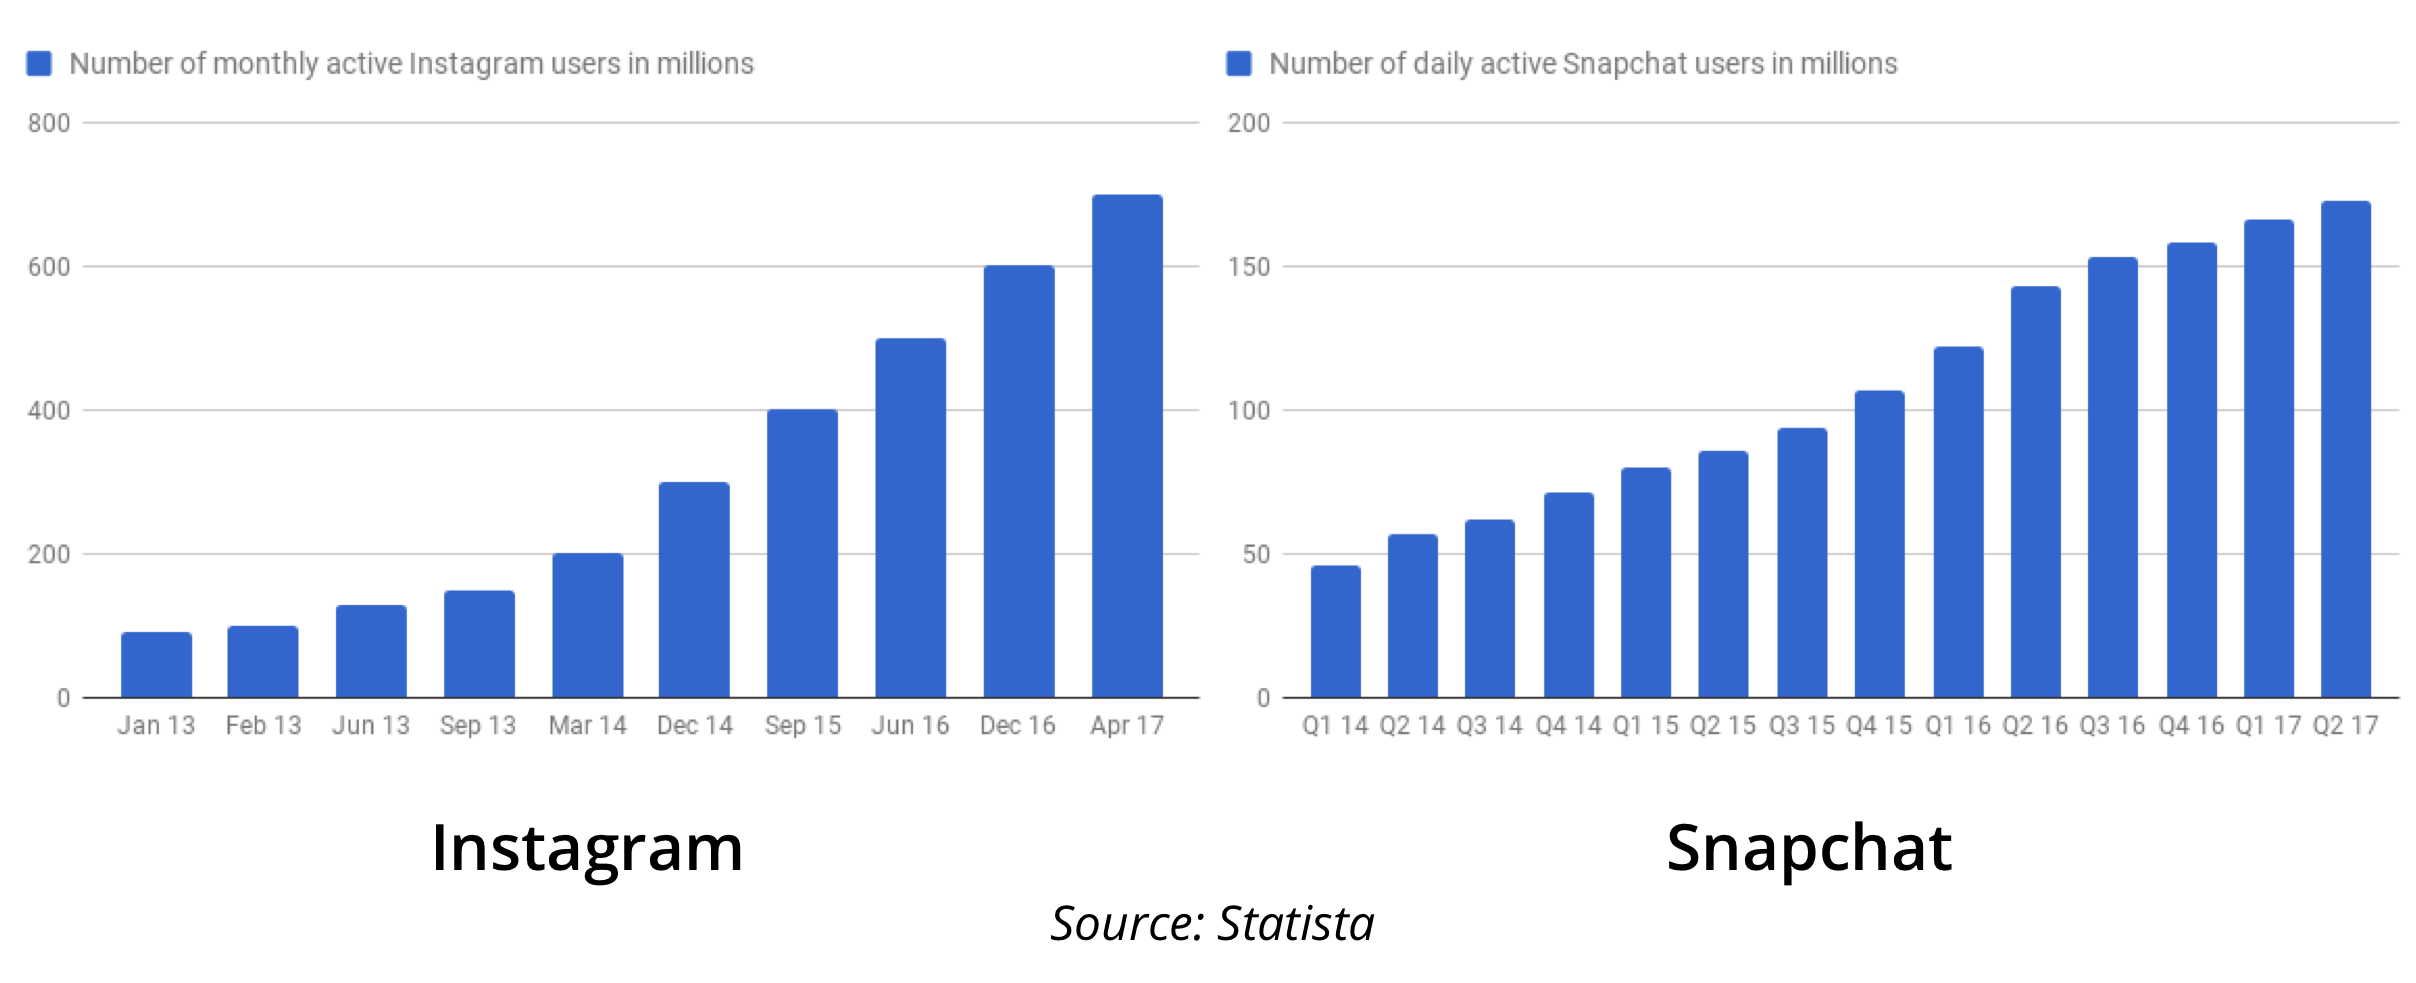 Instagram vs Snapchat growth charts